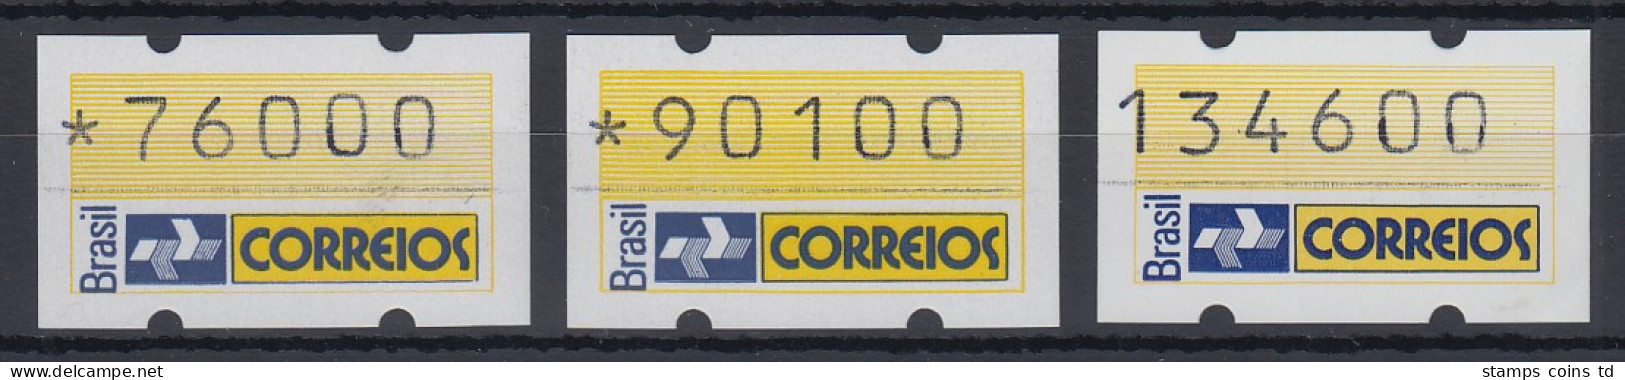 Brasilien Klüssendorf-ATM 1993 Postemblem Mi-Nr 4 Satz 76000 - 90100 - 134600 ** - Automatenmarken (Frama)